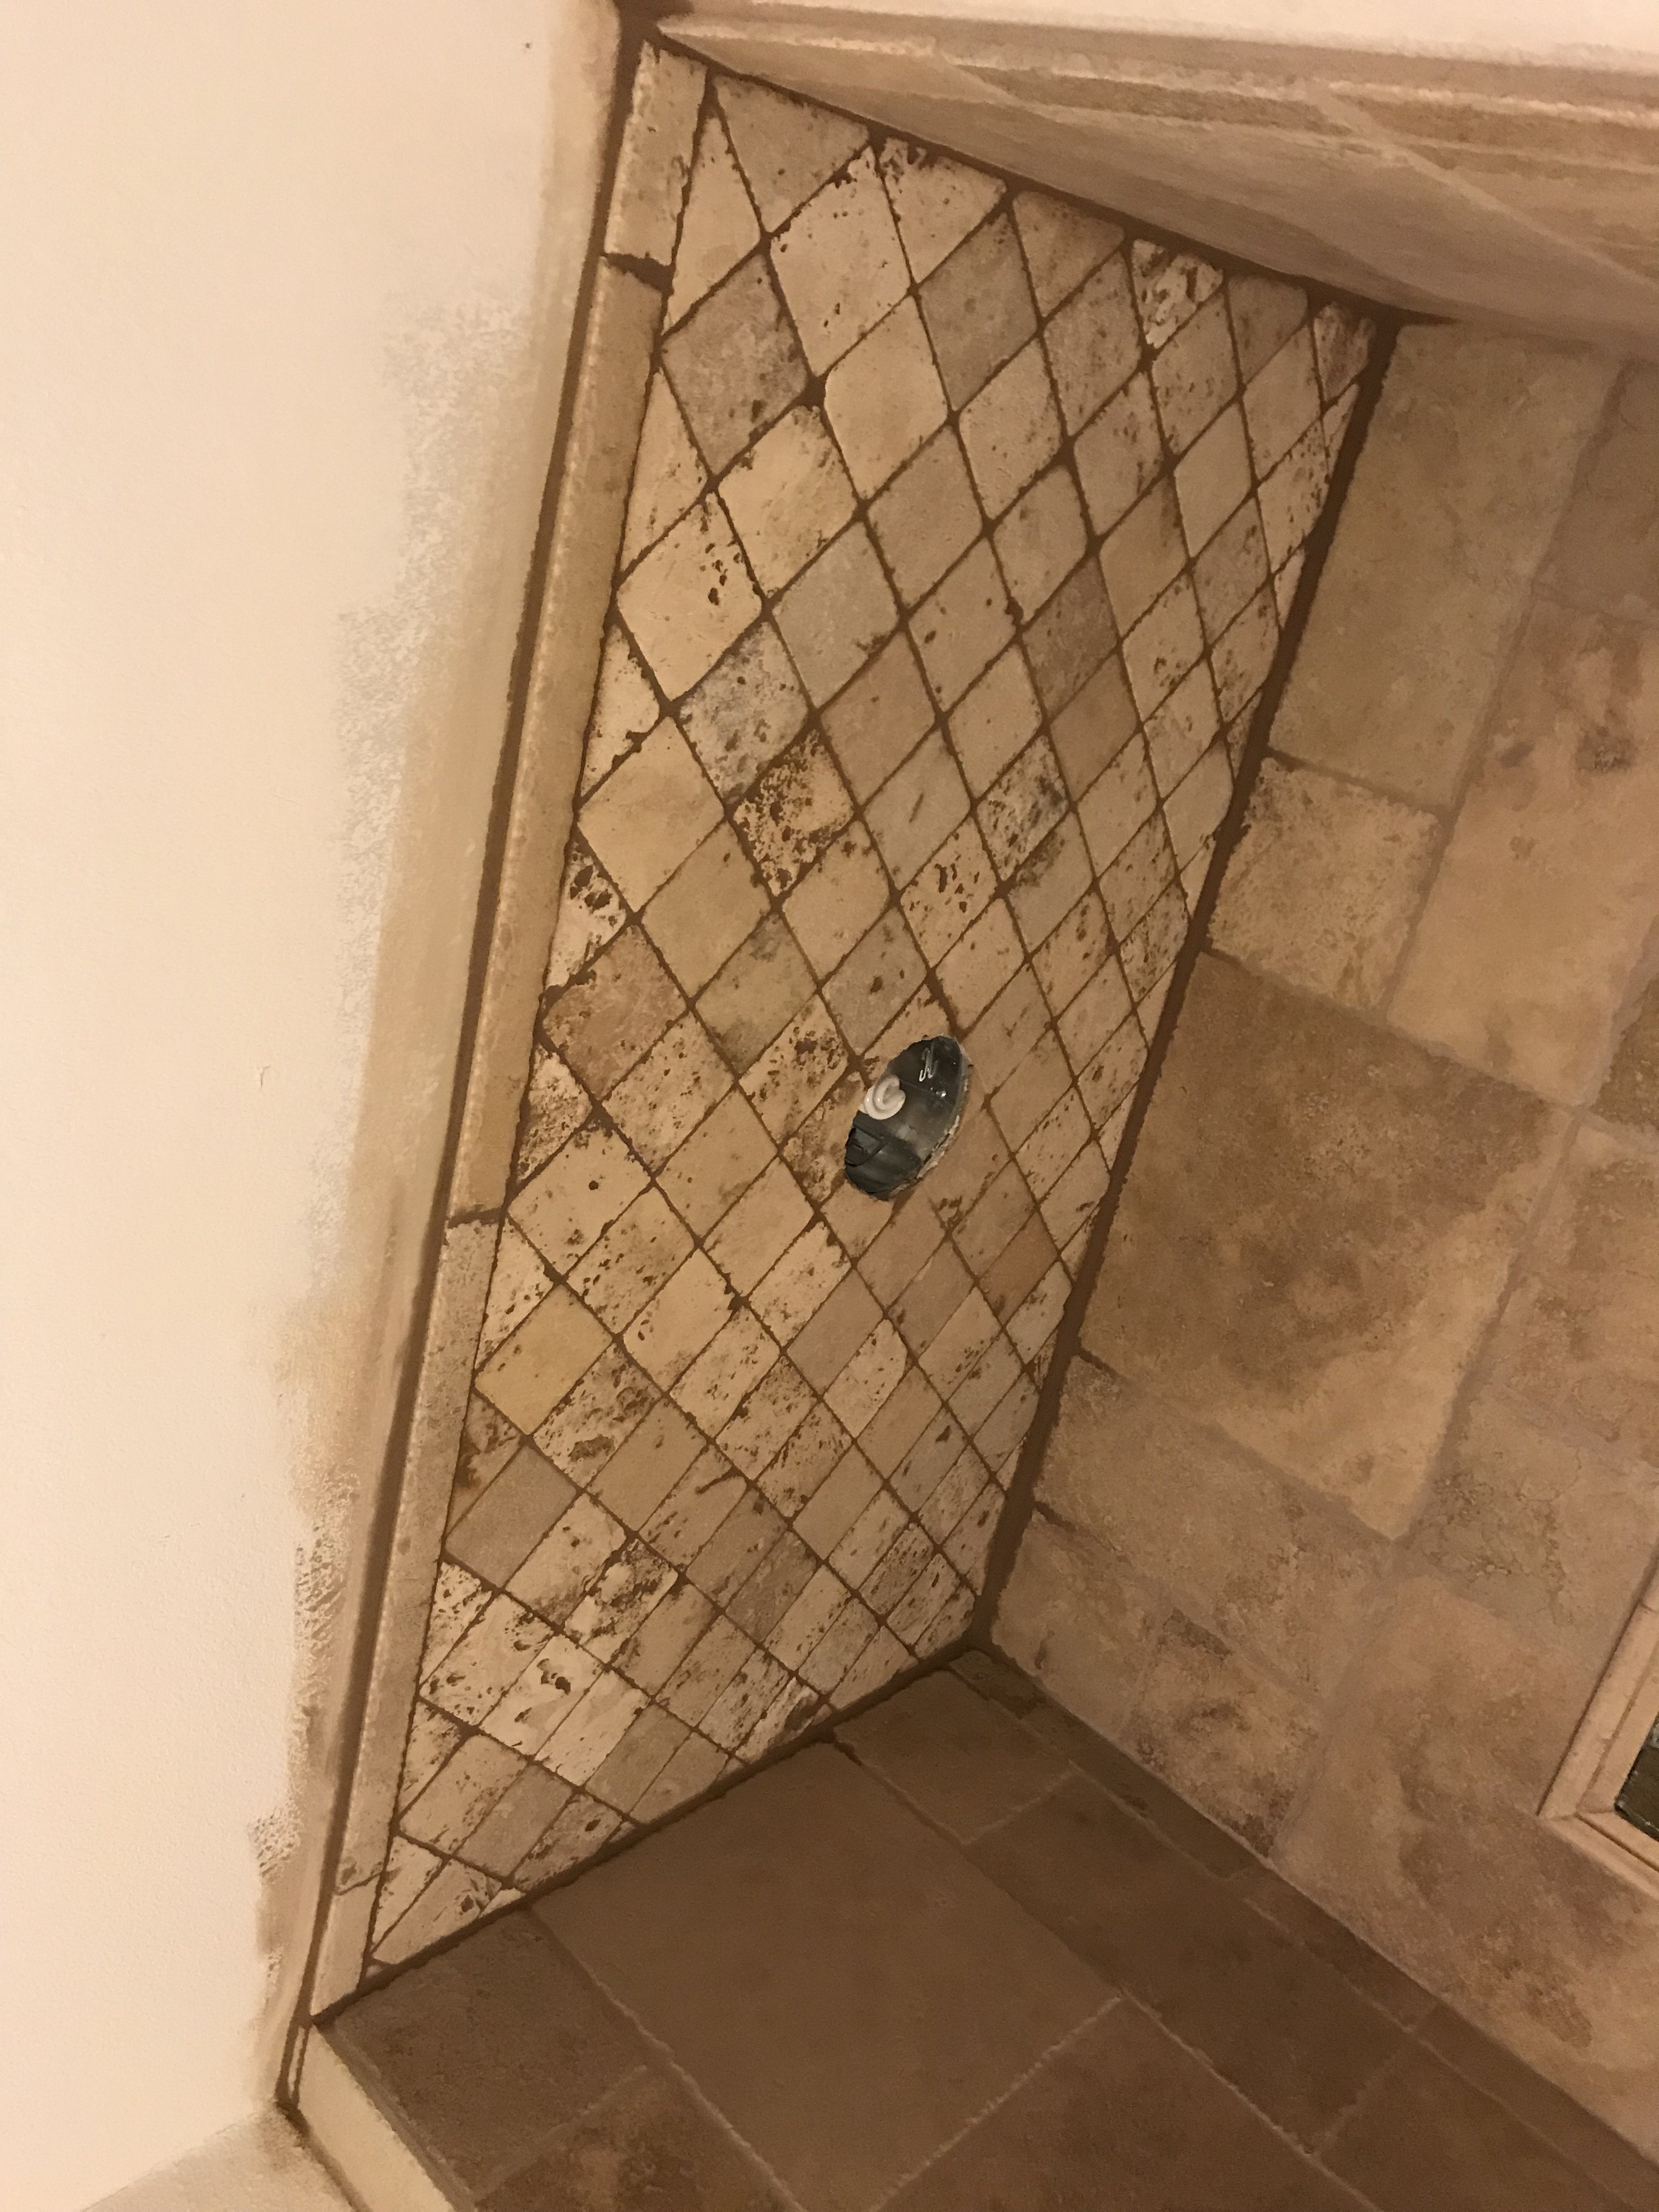 Bathroom Remodel w/ Custom Fitted Tub w/ Tile Front, Travertine Tile to Ceiling, Wood Plank Tile on Floor - Barnesville, GA